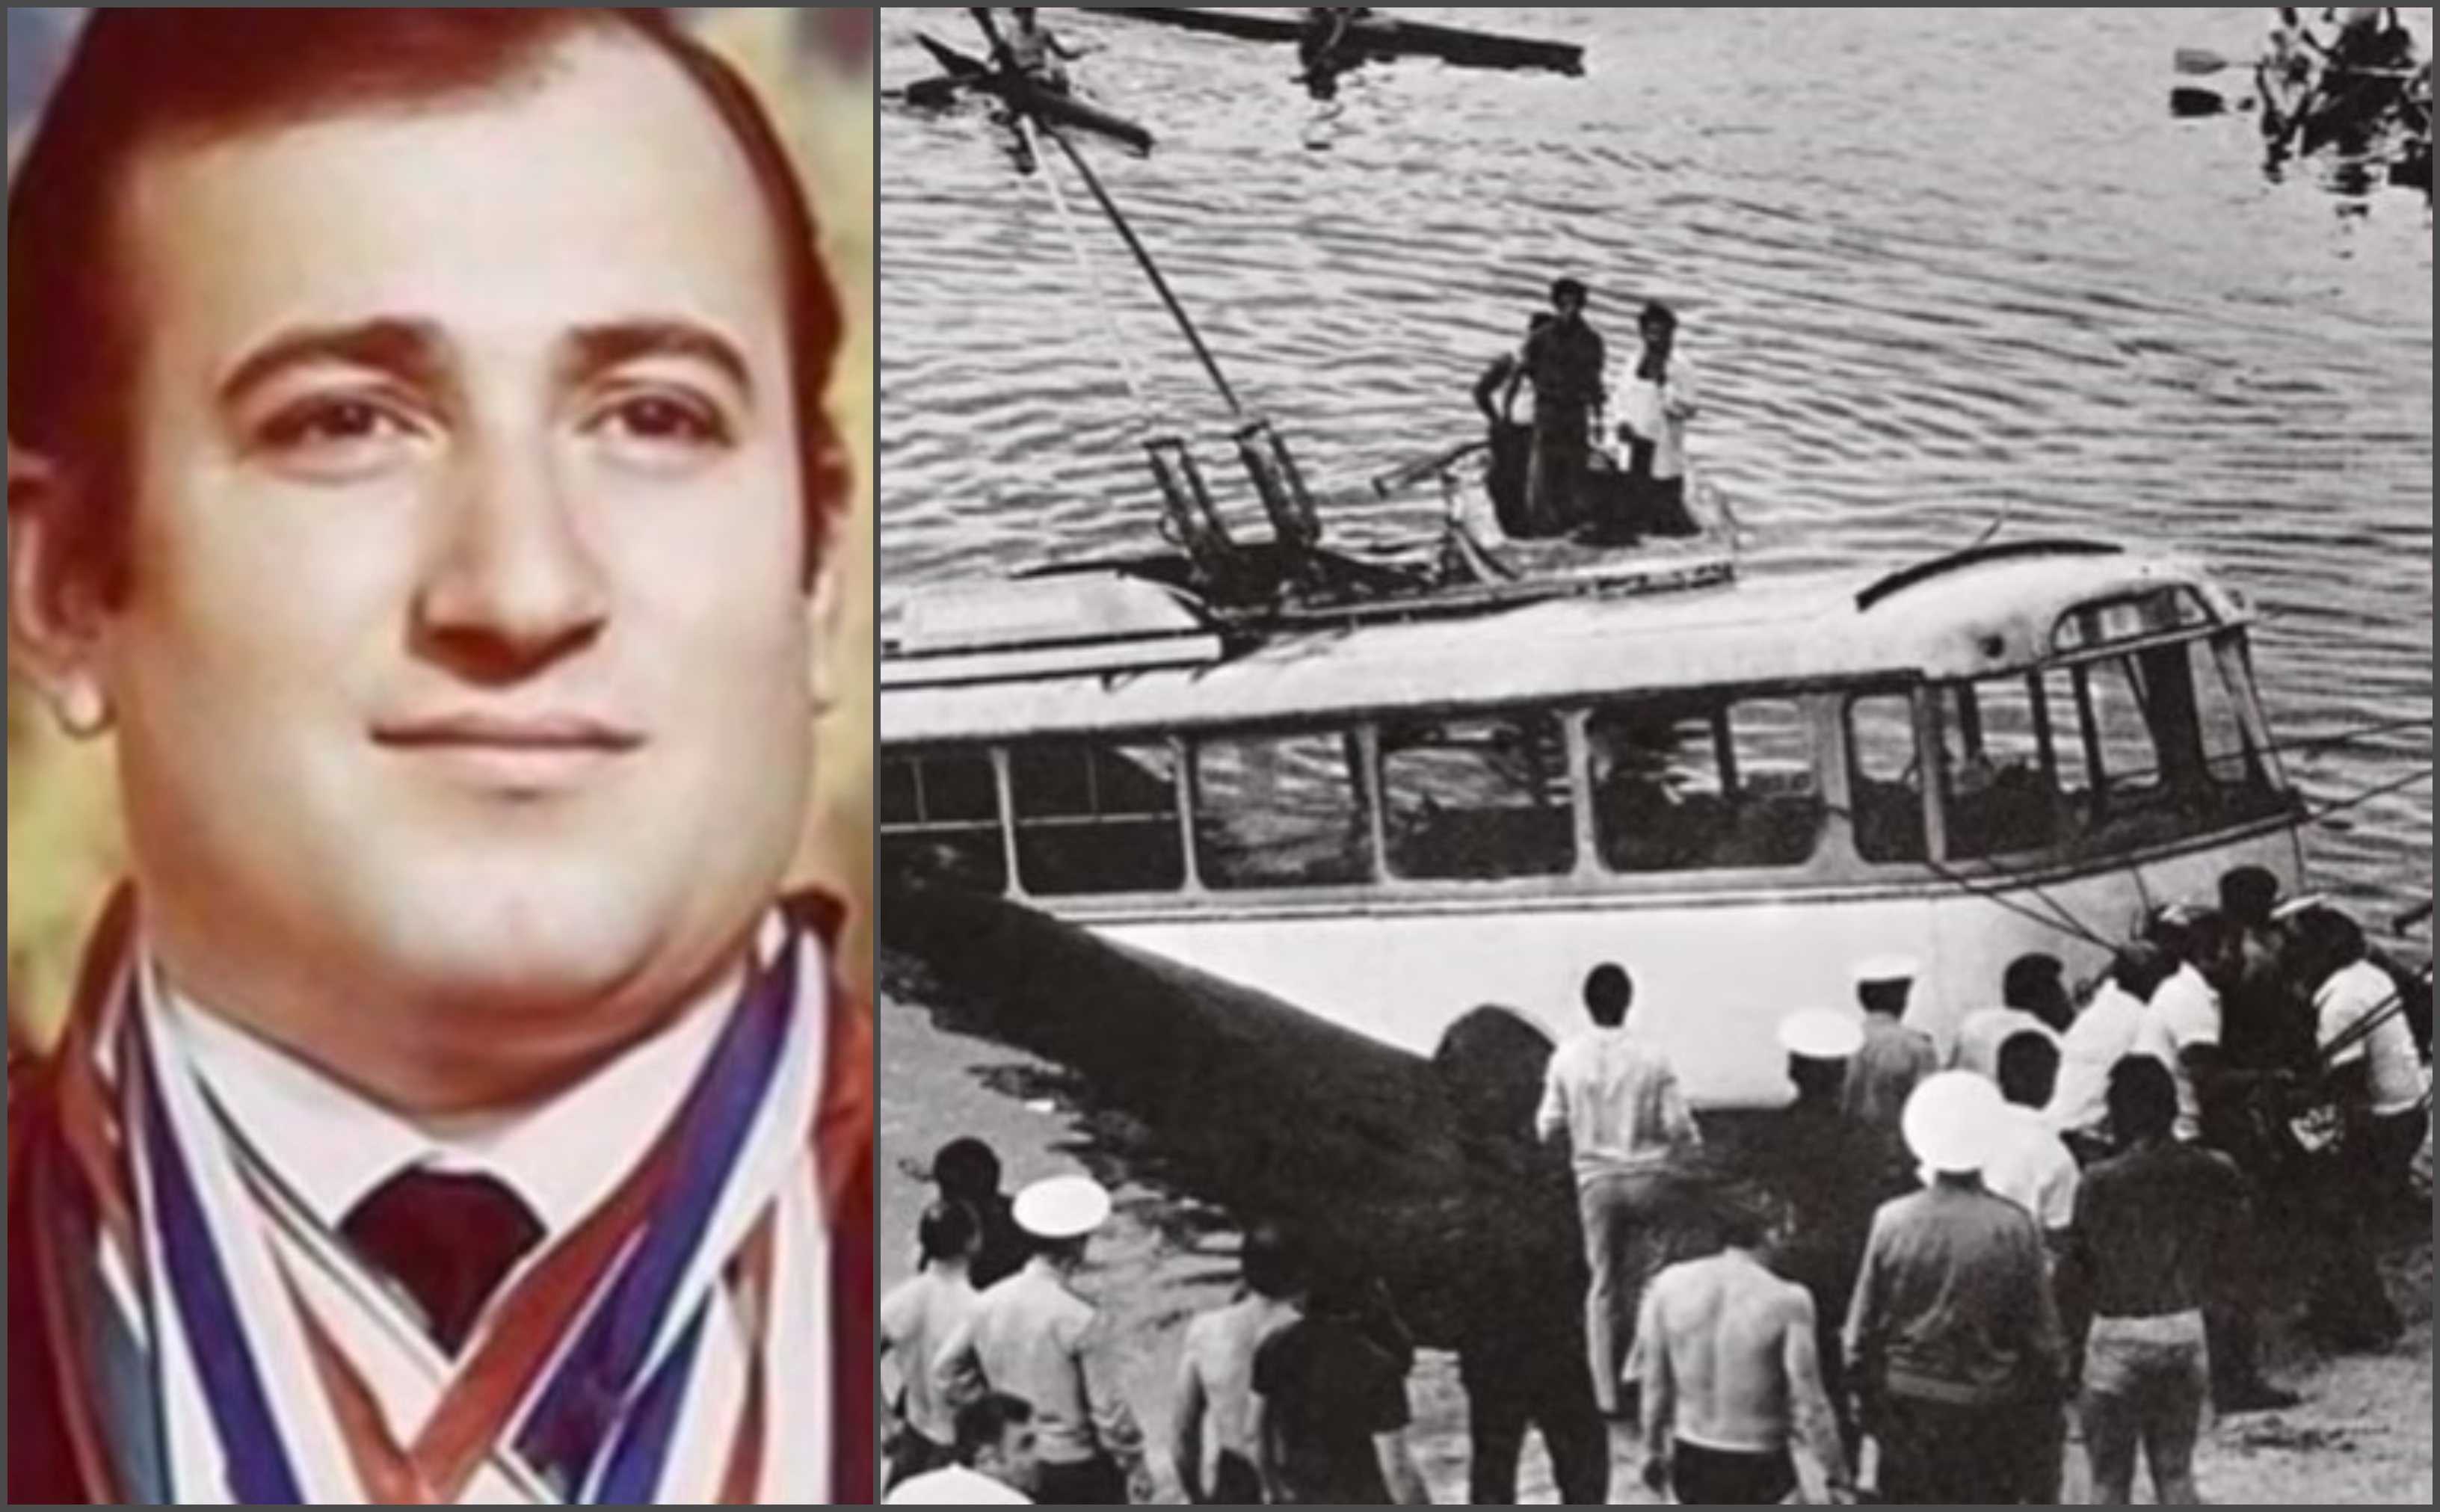 O πρωταθλητής κολύμβησης και “εθνικός ήρωας” της Αρμενίας που έσωσε είκοσι επιβάτες τρόλεϊ από βέβαιο πνιγμό. Η αυτοθυσία και η καθυστερημένη αναγνώριση